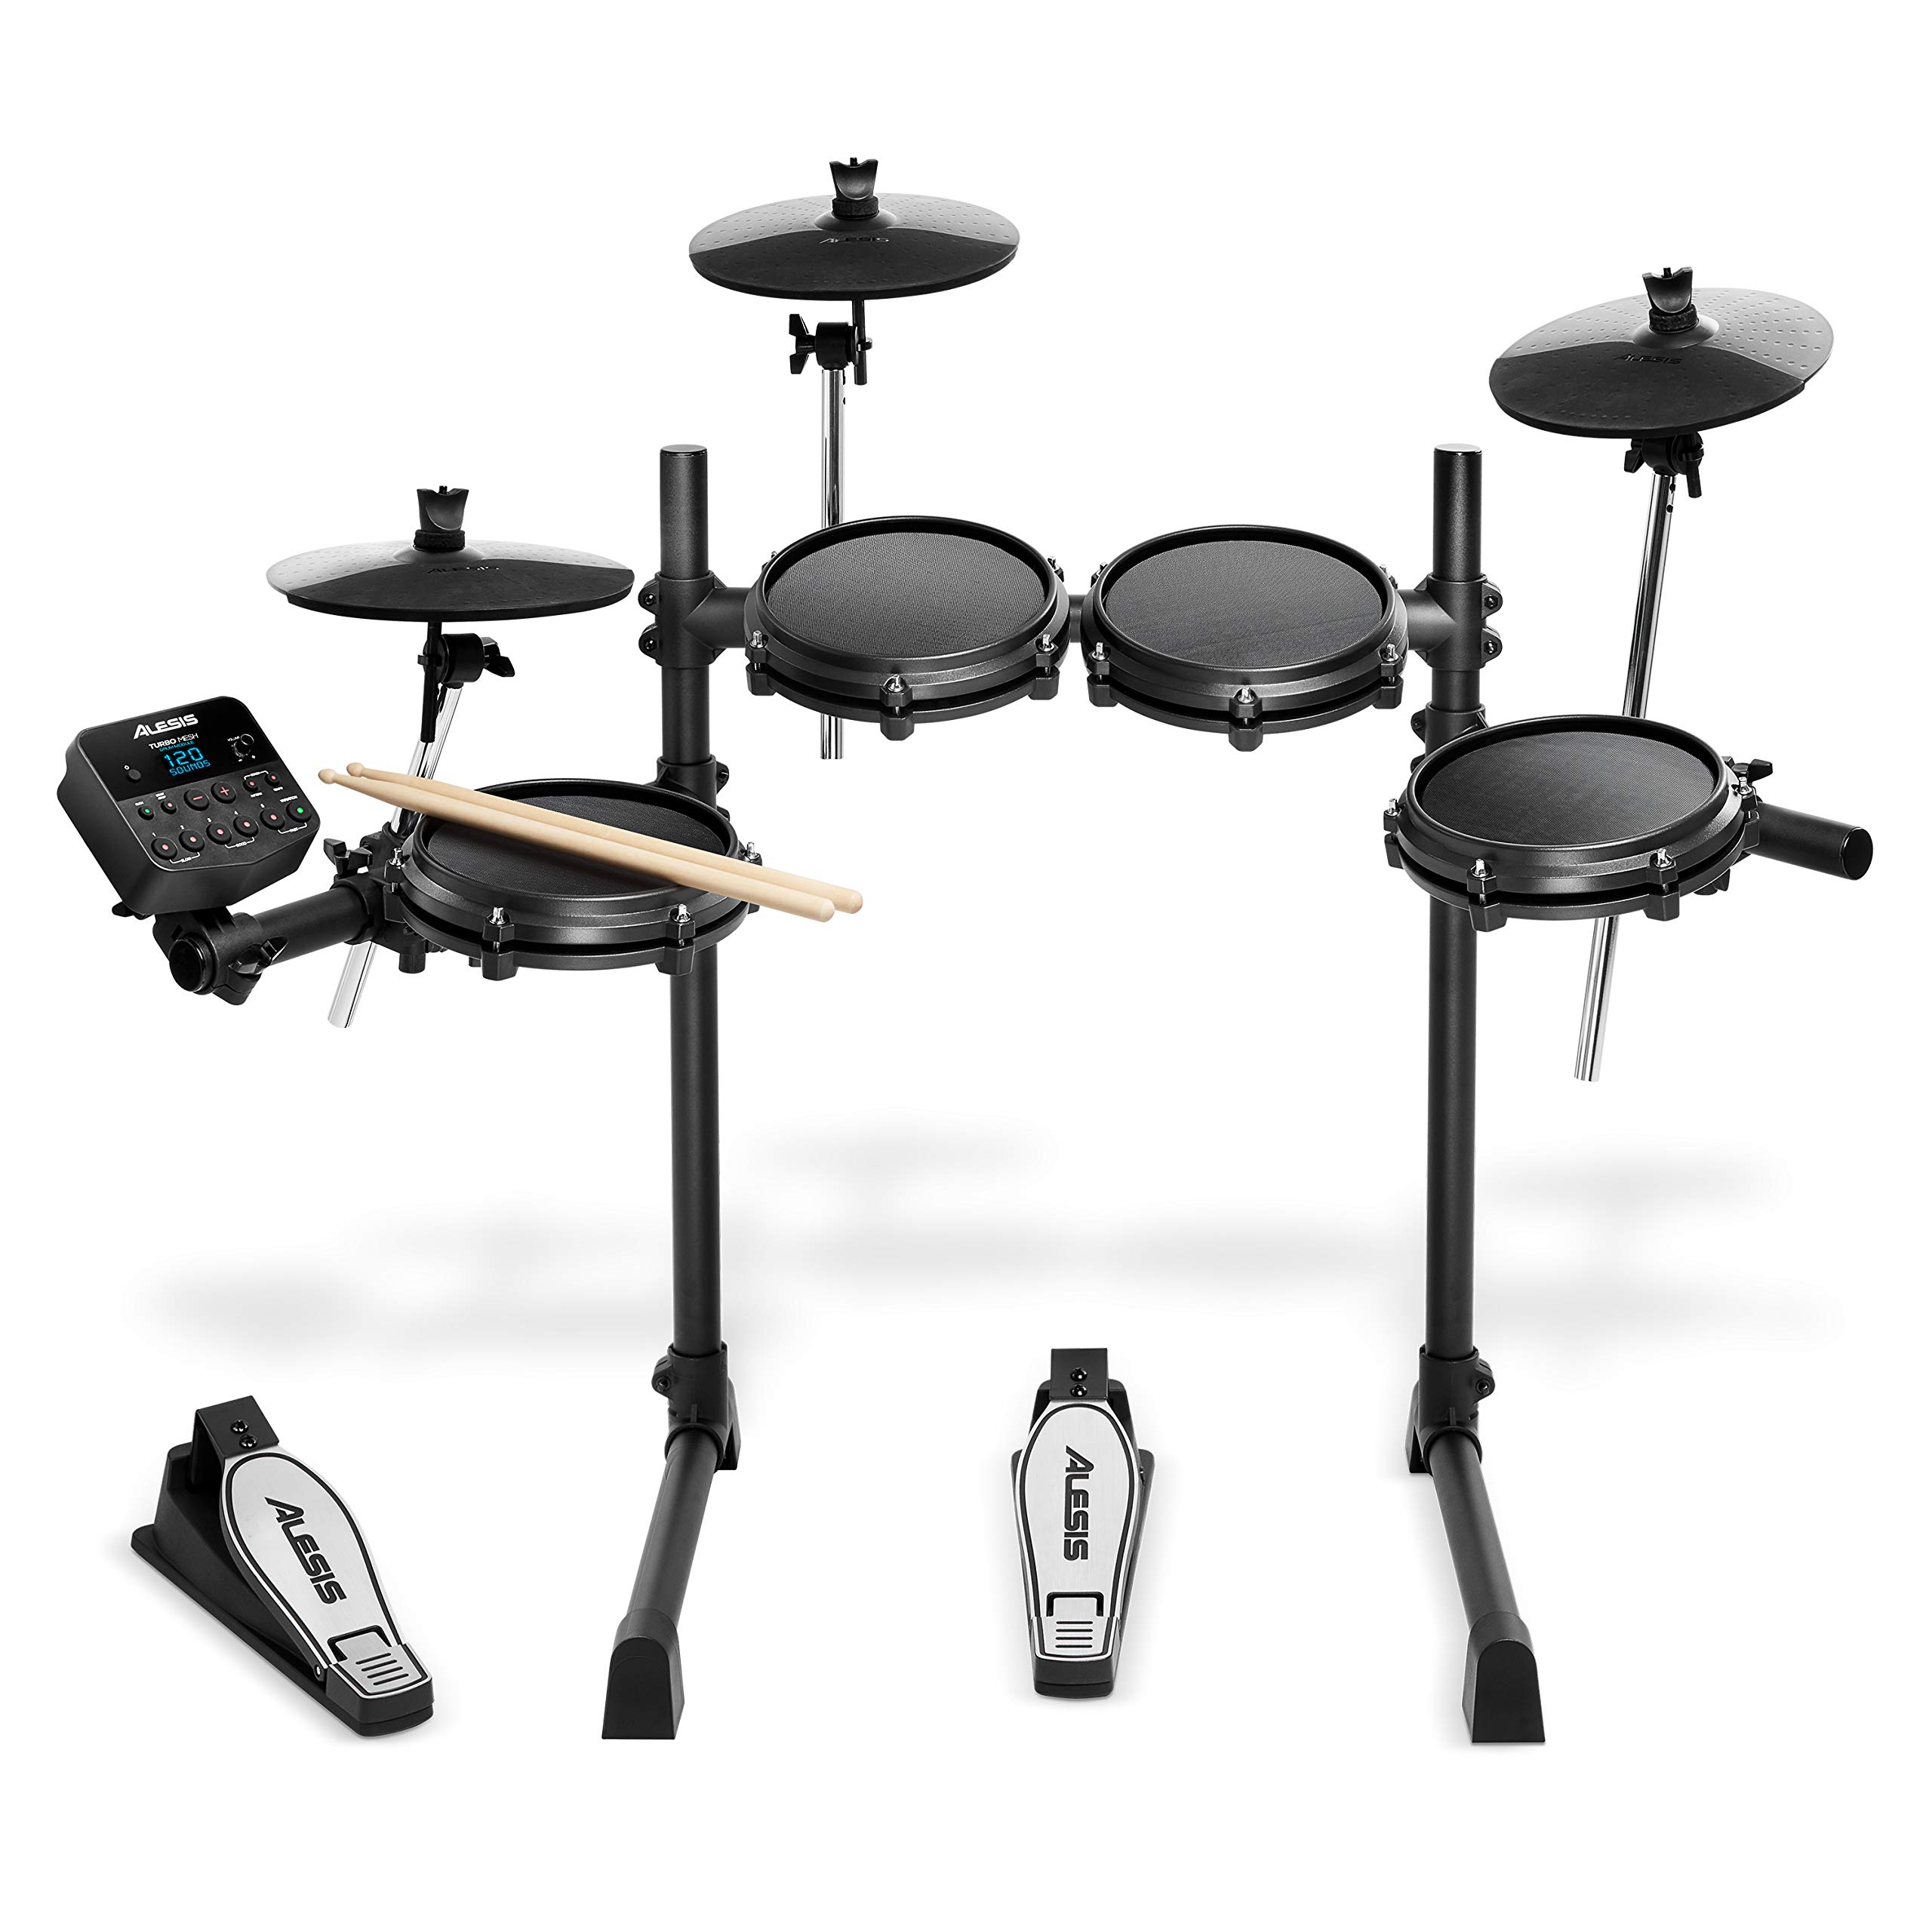 Alesis Drums Turbo Mesh 套件 - 七件式网状电动鼓组，具有 100 多种声音、30 个...